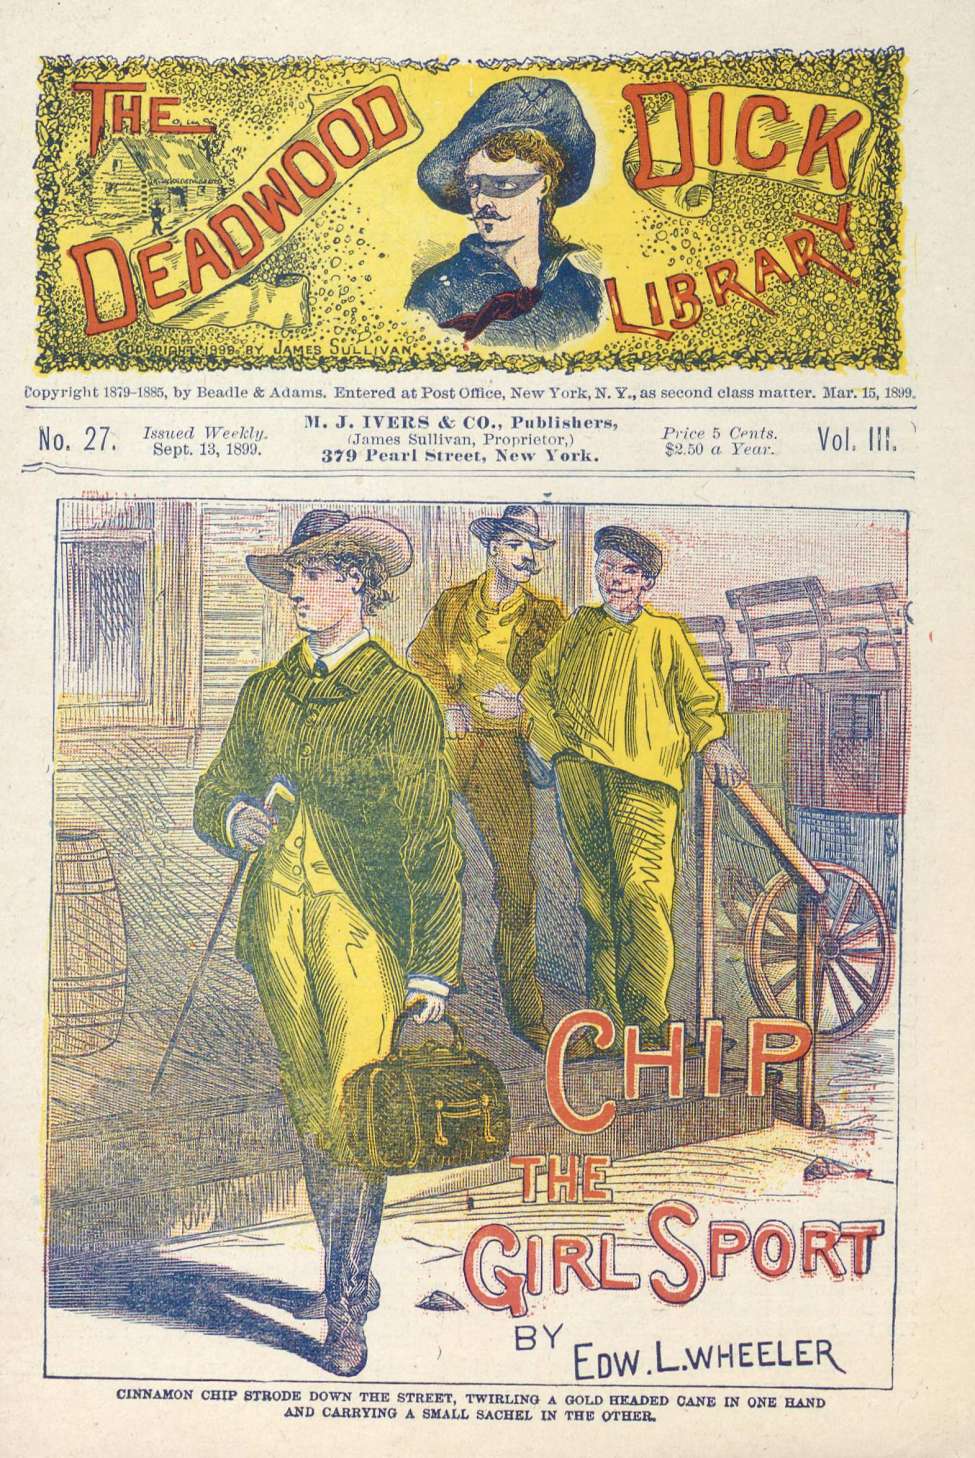 Book Cover For Deadwood Dick Library v2 27 - Chip, the Girl Sport